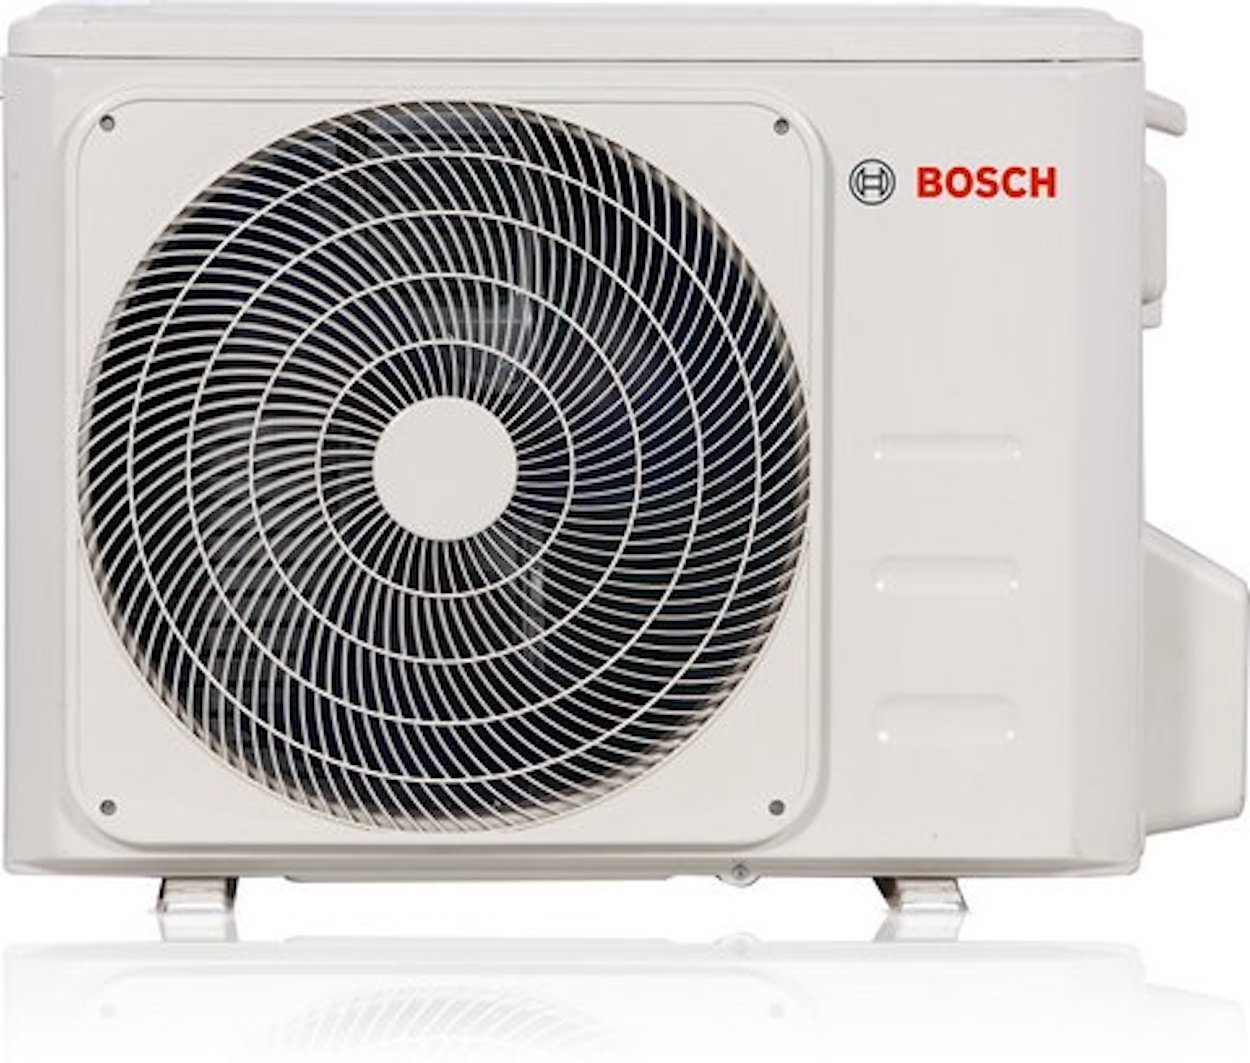 BOSCH Klimagerät CL5000 RAC 2,6-2 OUE Split Außeneinheit, 550x700x275, 2,6 kW